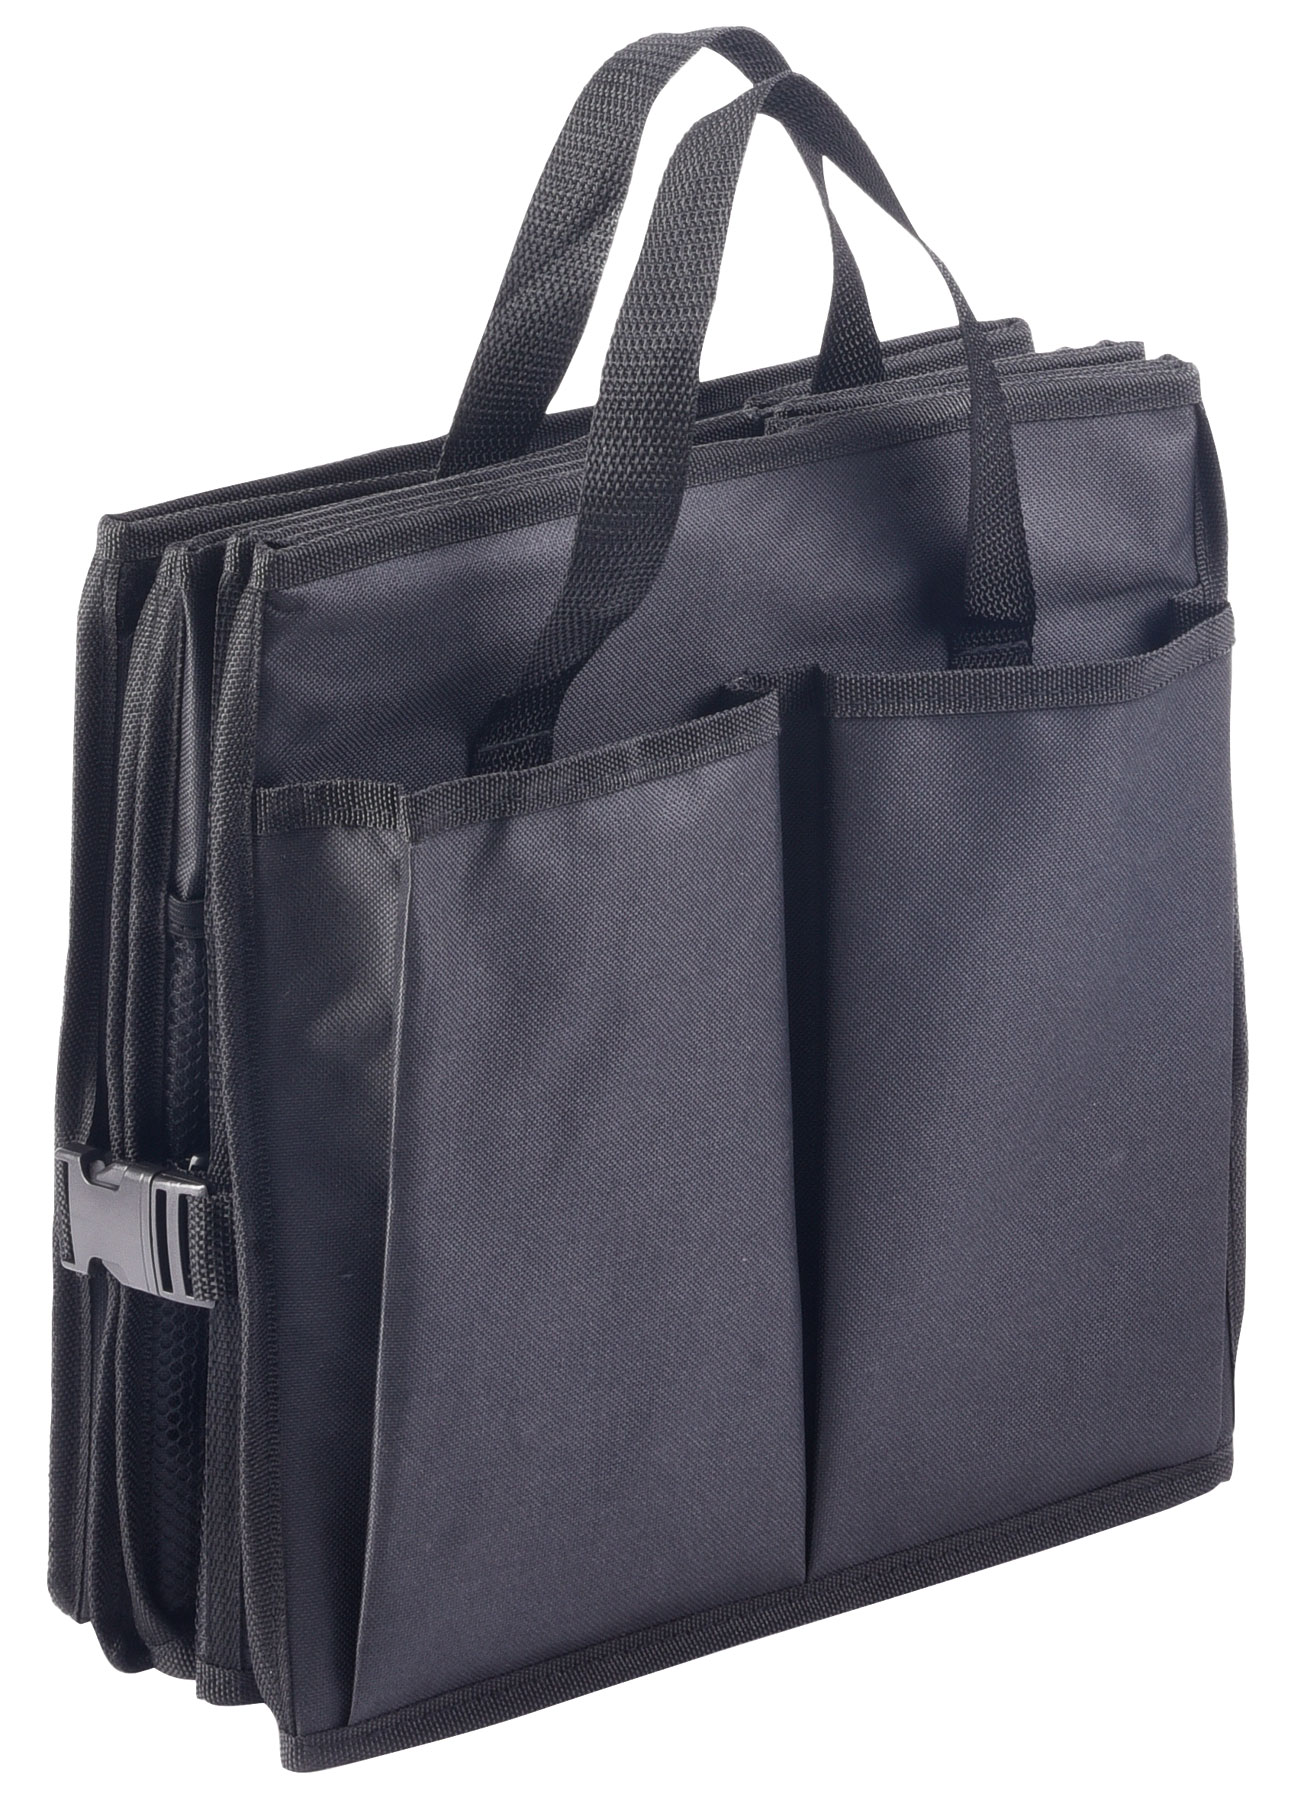 Luggage compartment organiser bag SUPER GADGET - black